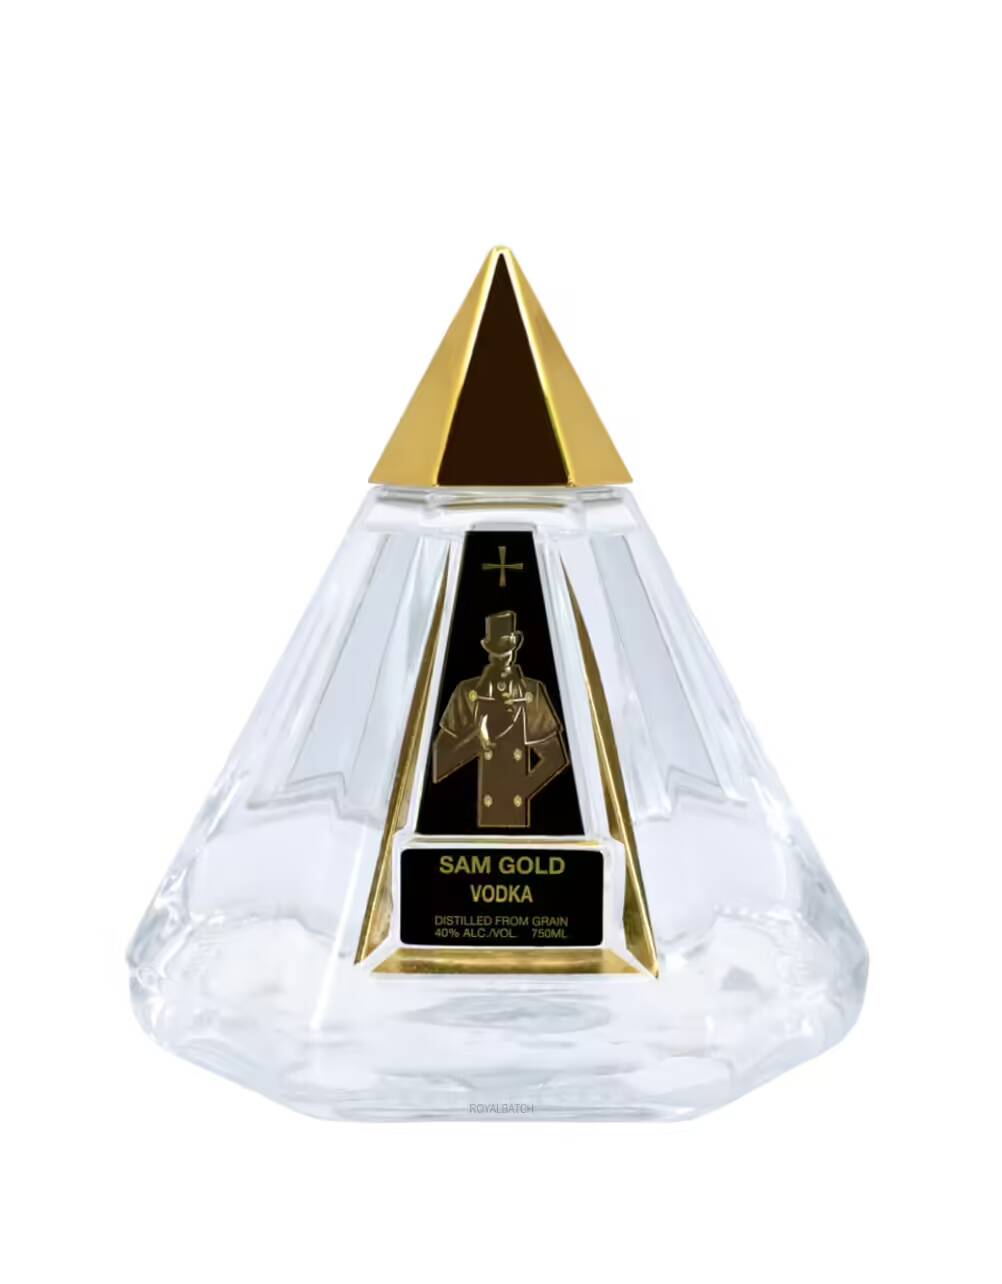 Sam Gold Pyramid Original Vodka